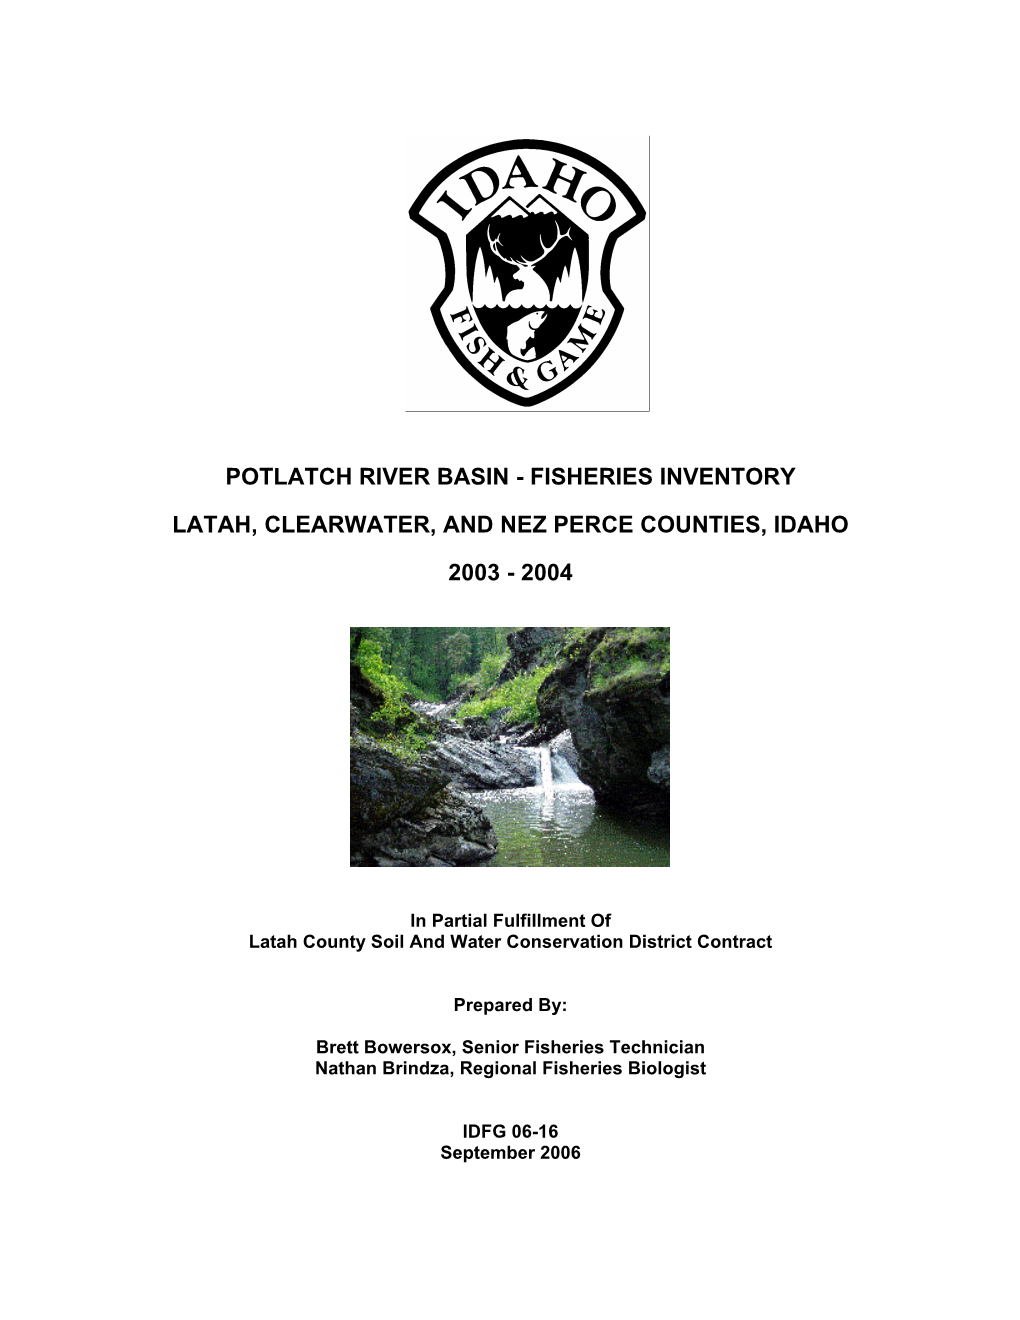 Potlatch River Basin - Fisheries Inventory